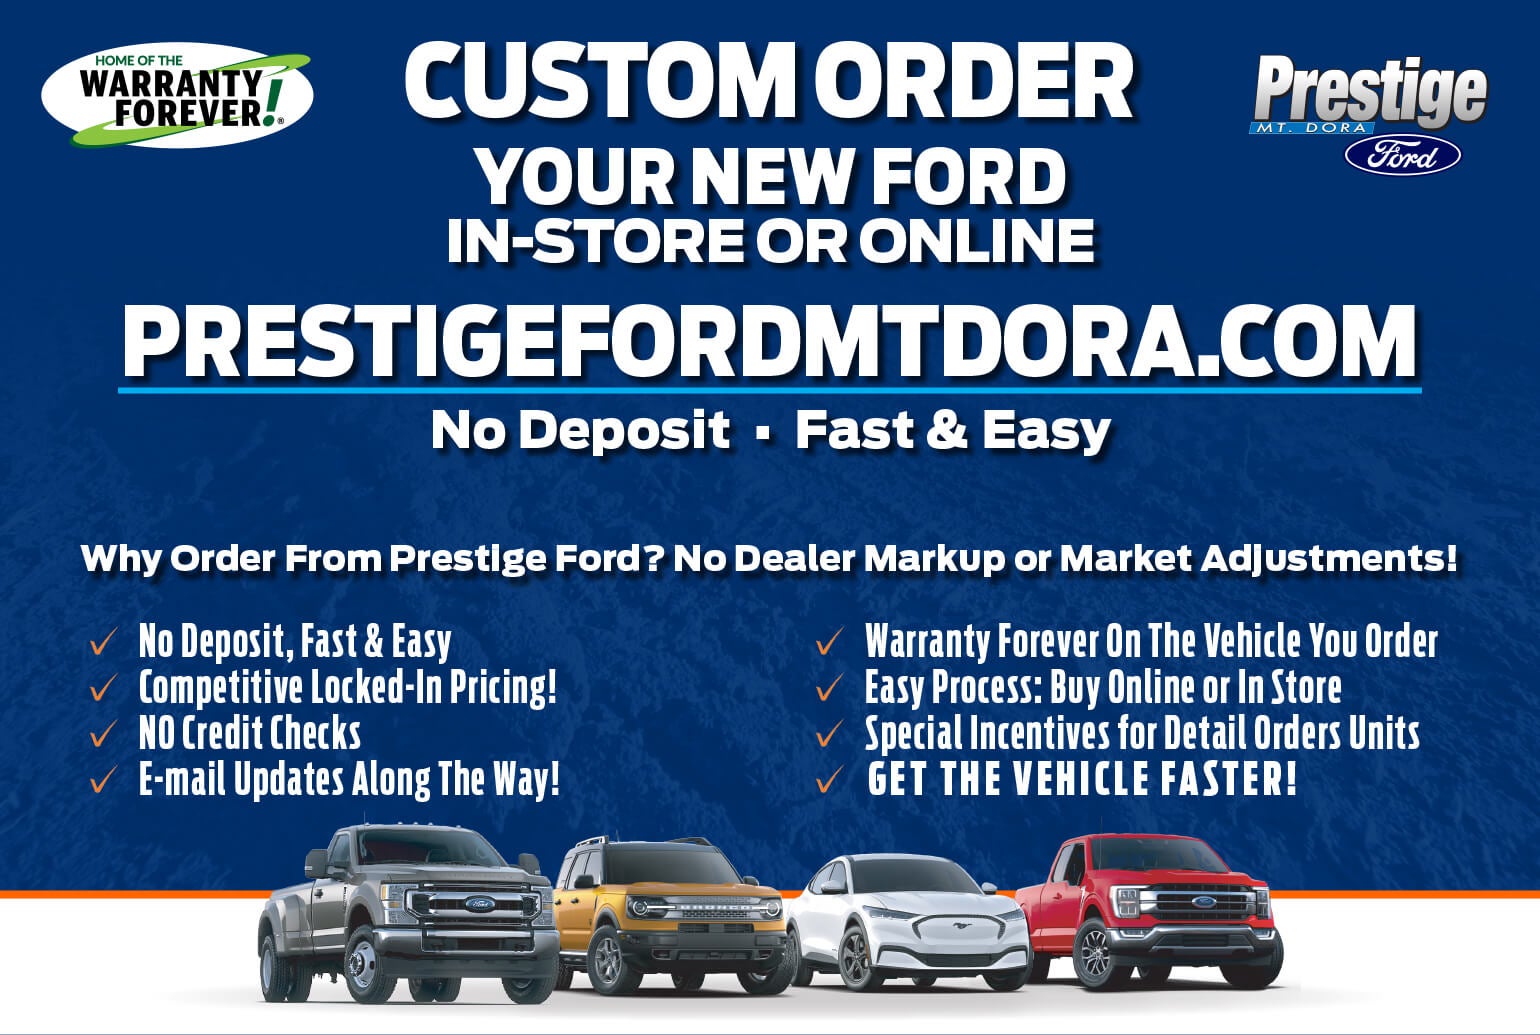 Prestige Ford of Mount Dora - Where Can I Custom Order a Ford near Sanford FL